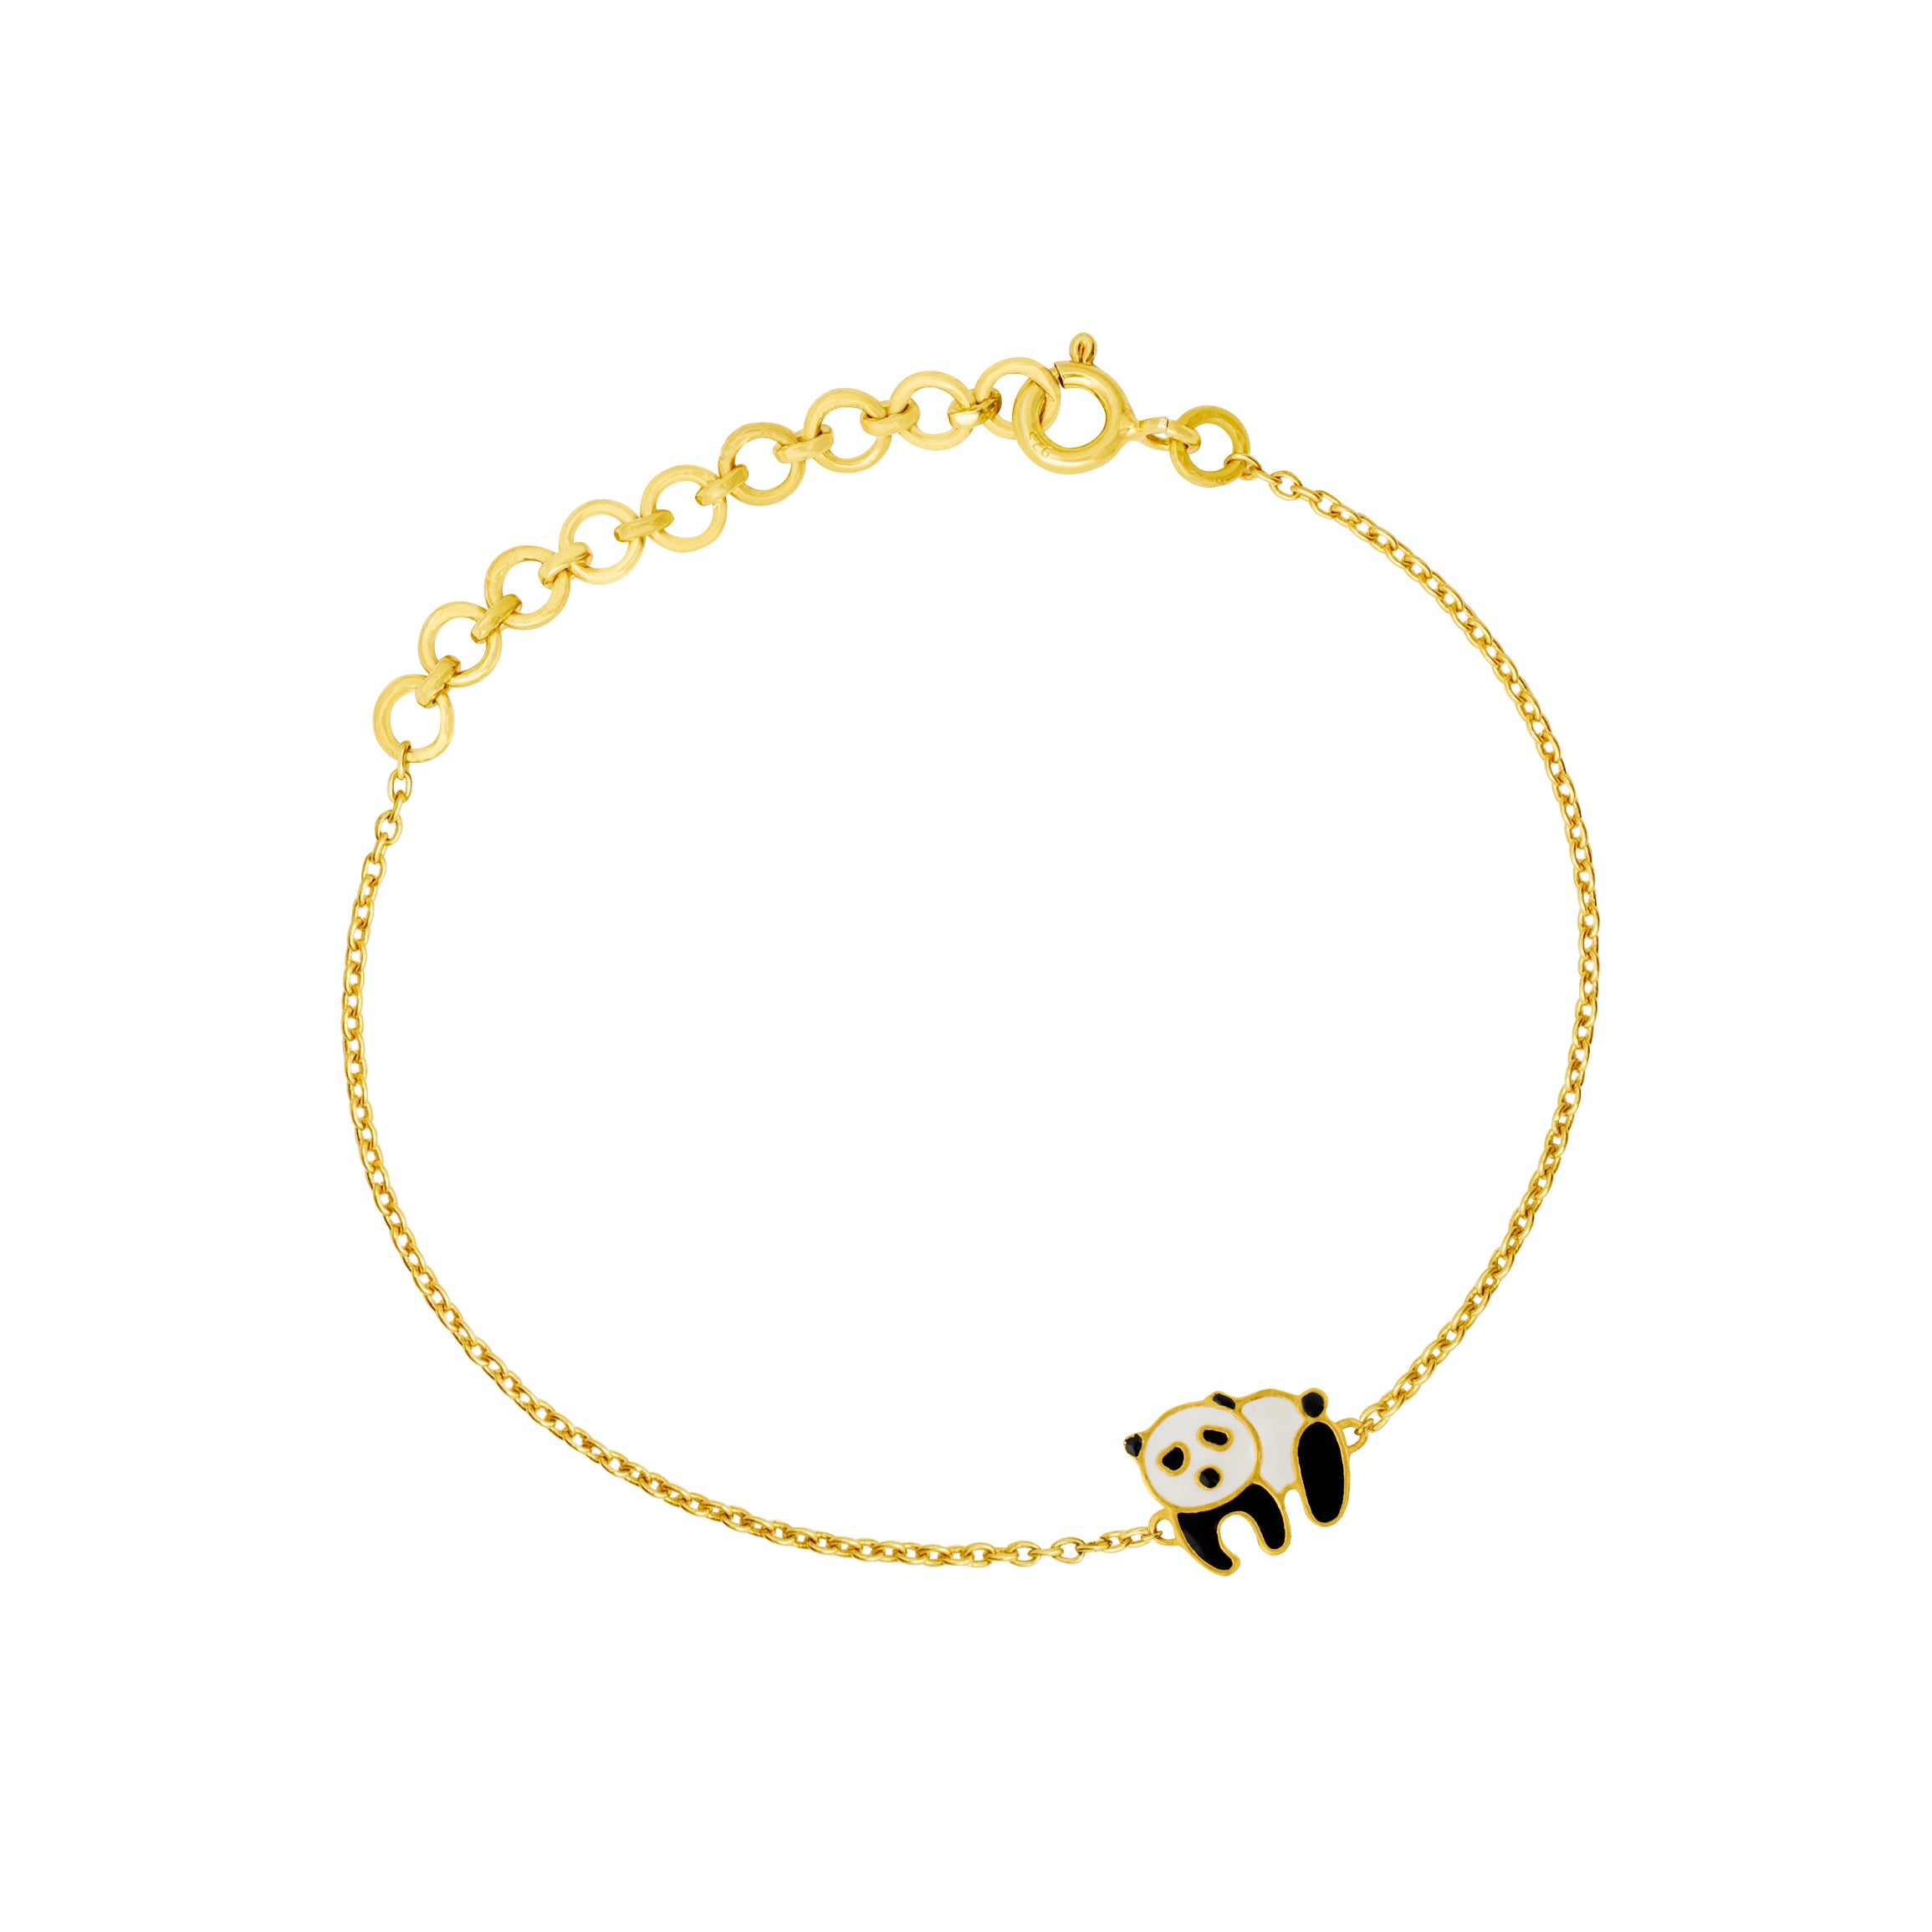 Panda Charm enamel  Bracelet (Small)